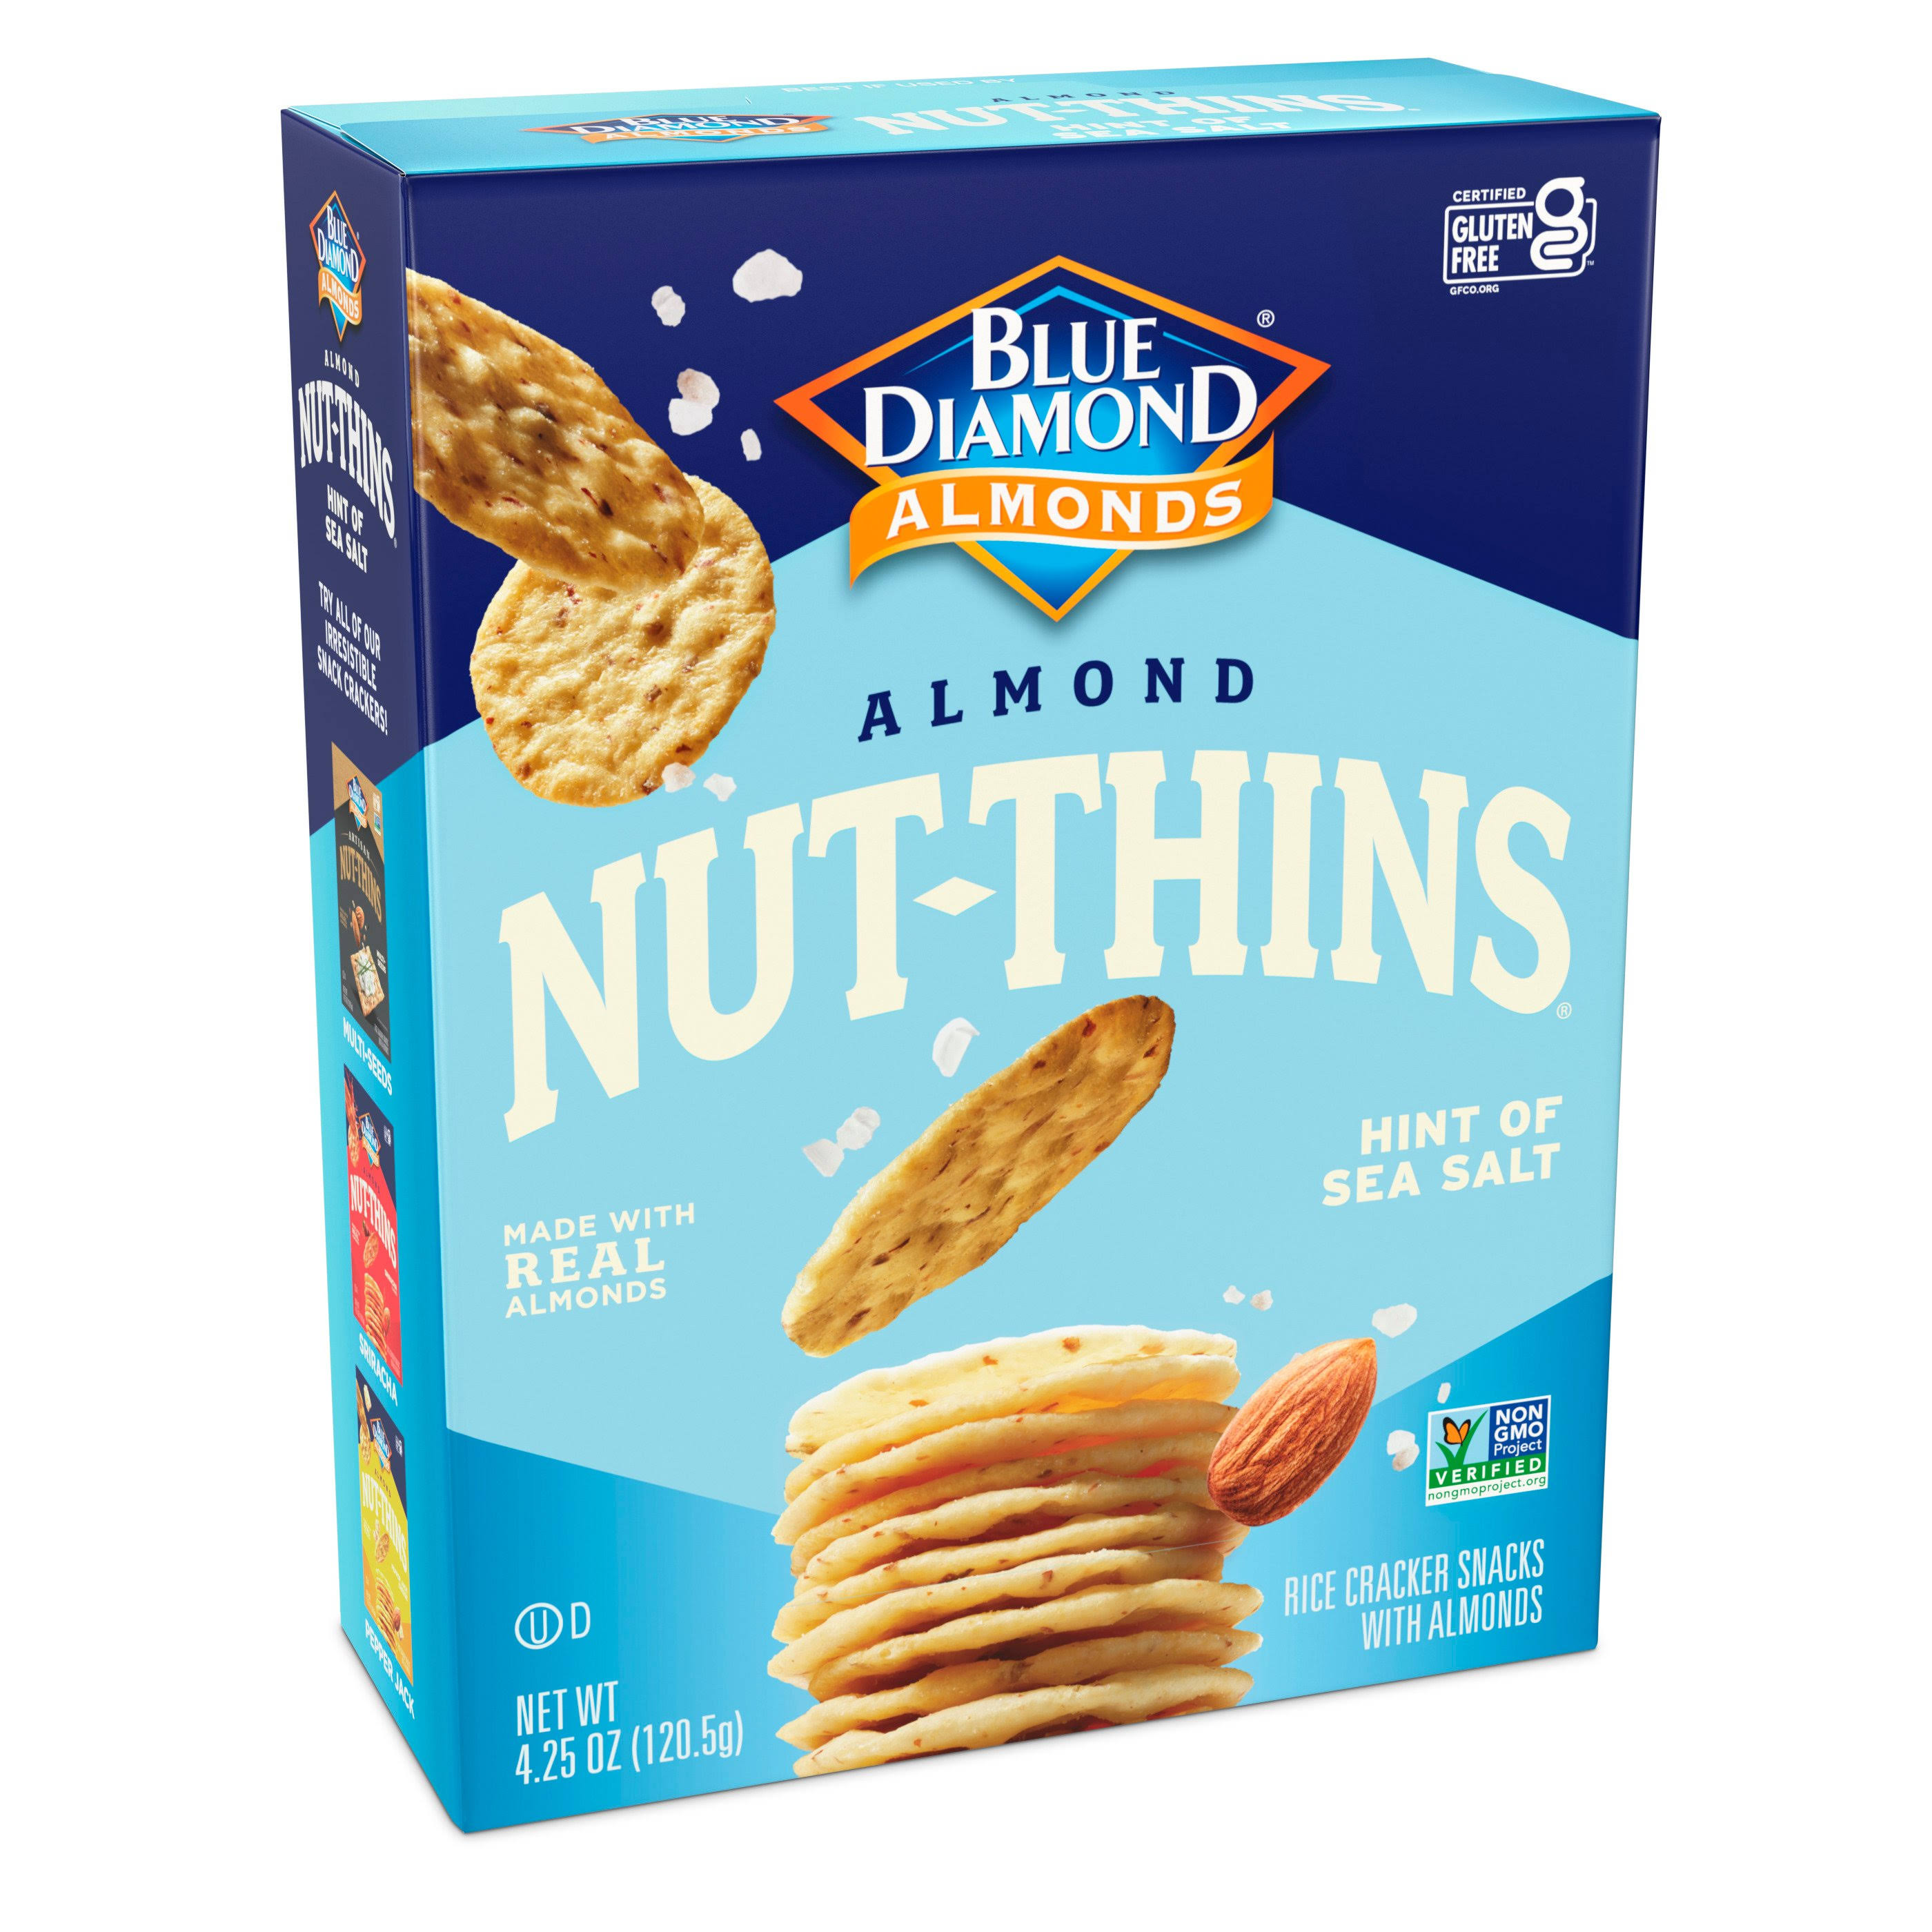 Blue Diamond Almond Nut-Thins Cracker Snacks - Hint of Sea Salt, 4.25oz